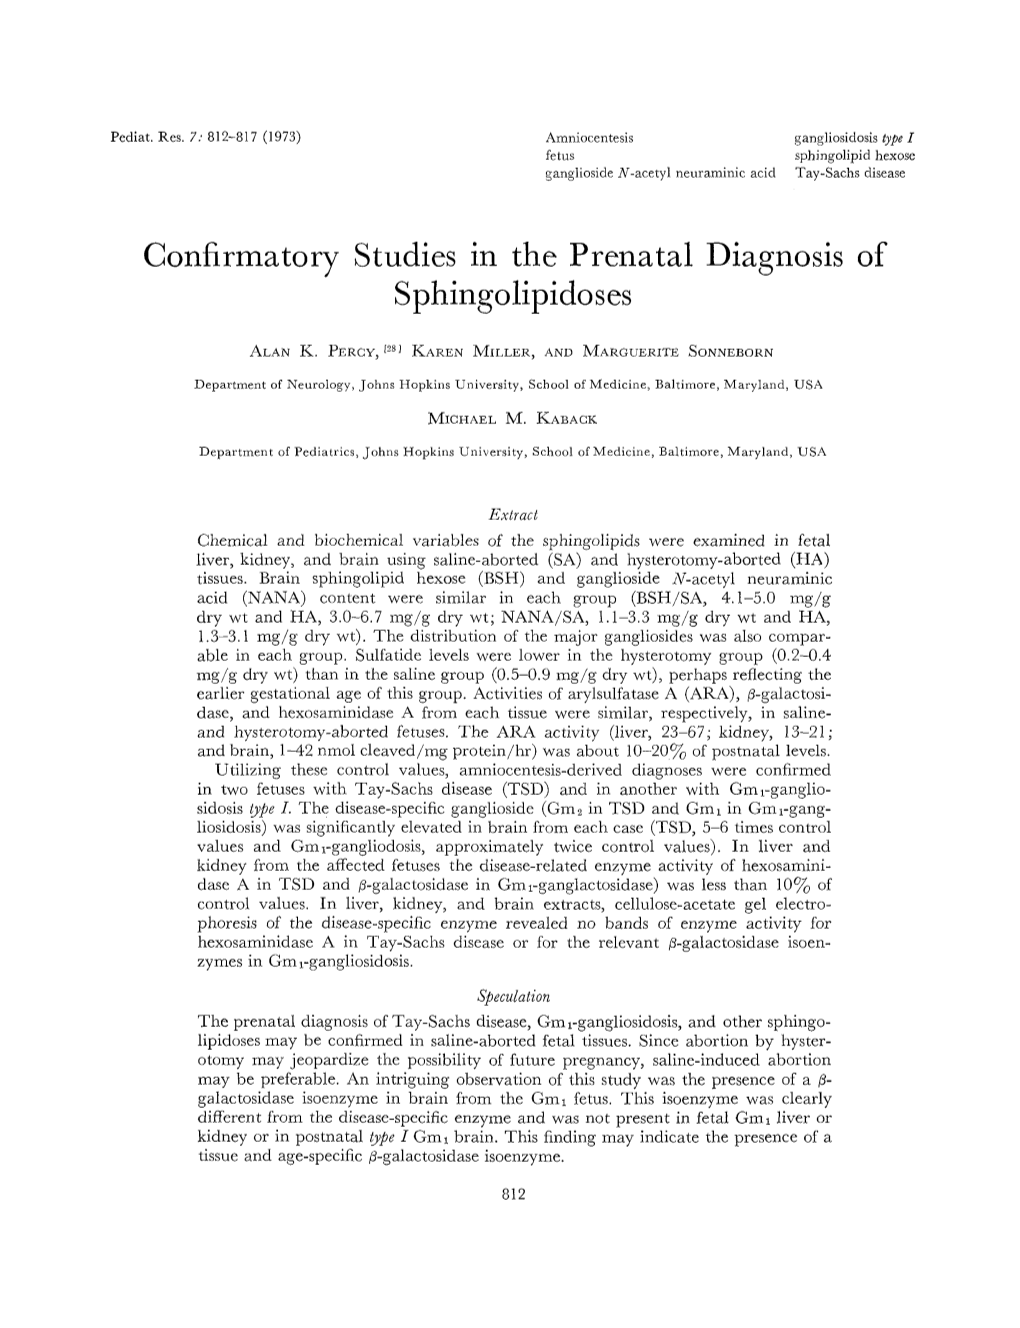 Confirmatory Studies in the Prenatal Diagnosis of Sphingolipidoses